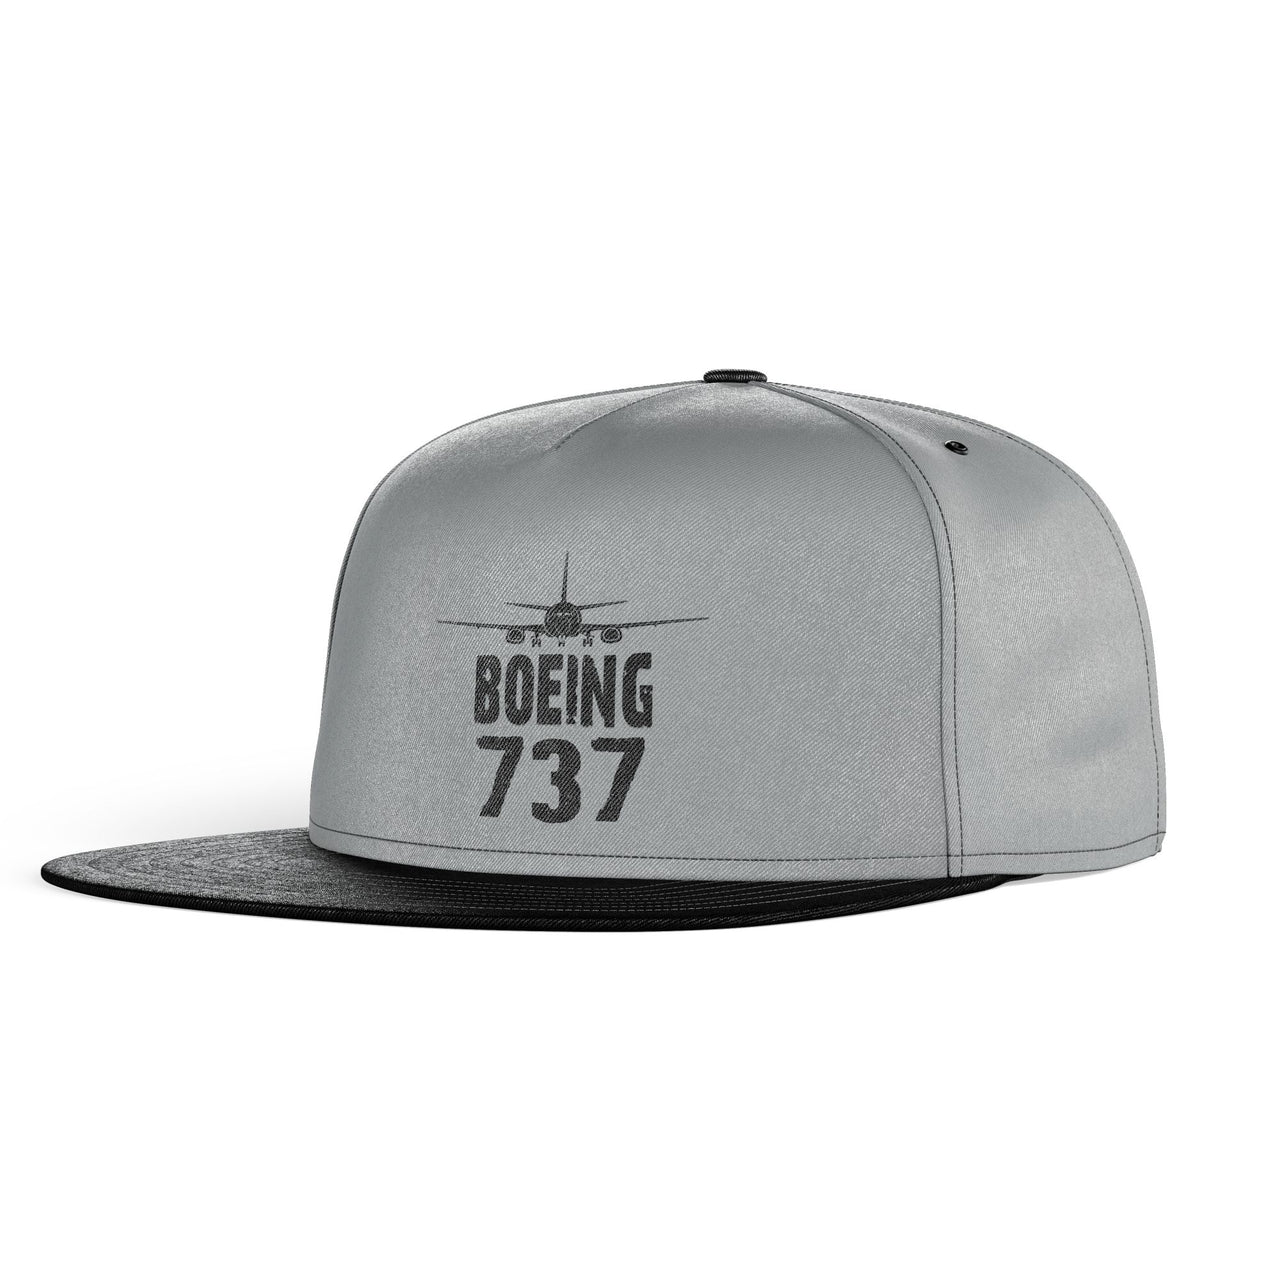 Boeing 737 & Plane Designed Snapback Caps & Hats